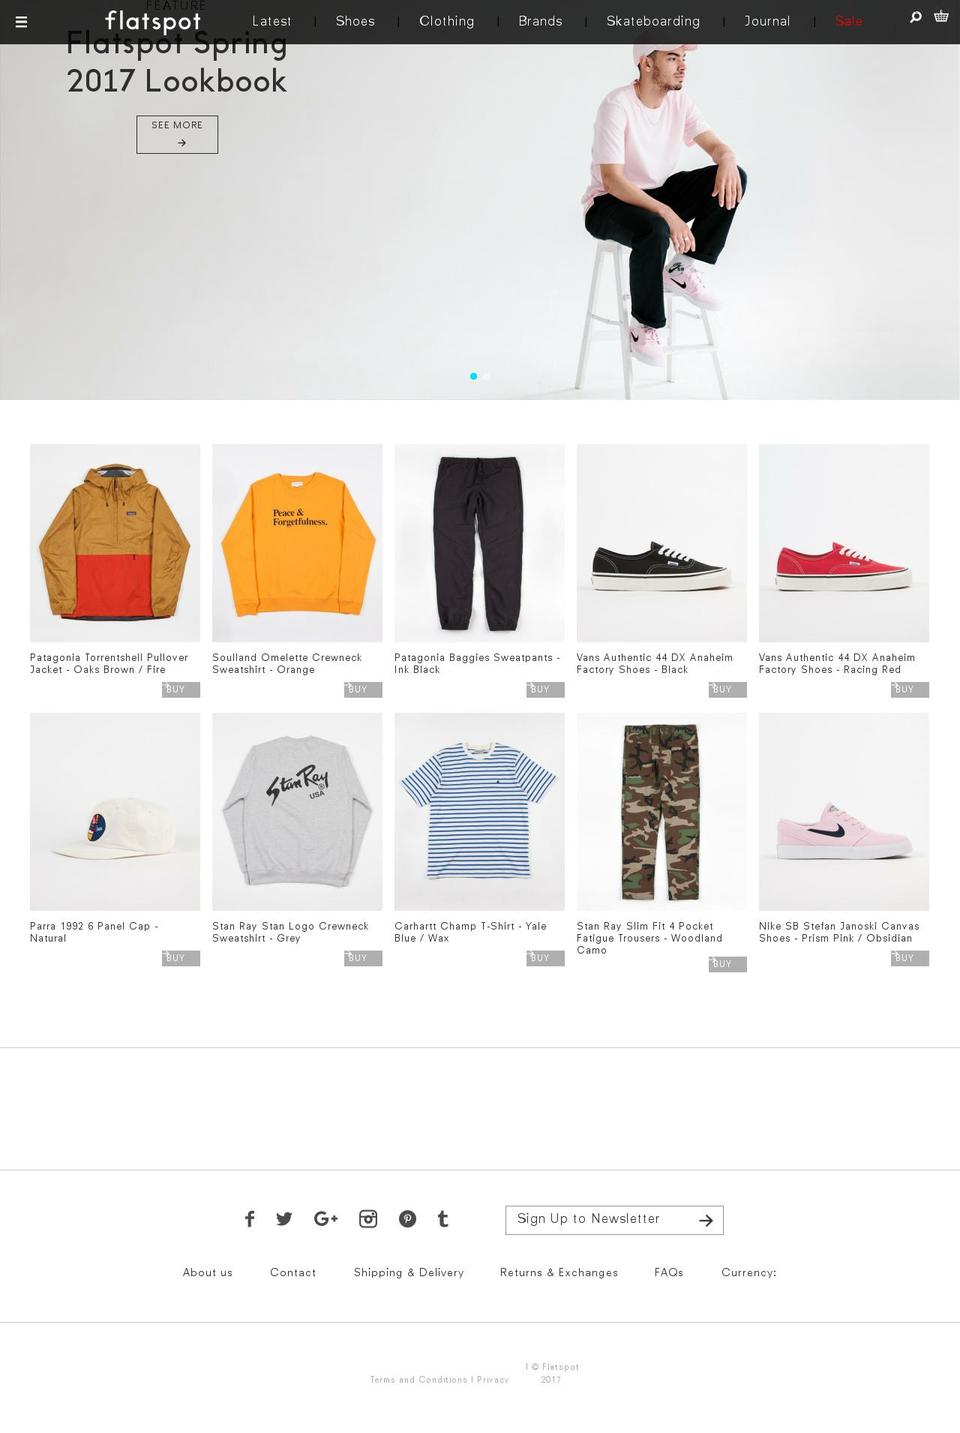 flatspot.com shopify website screenshot